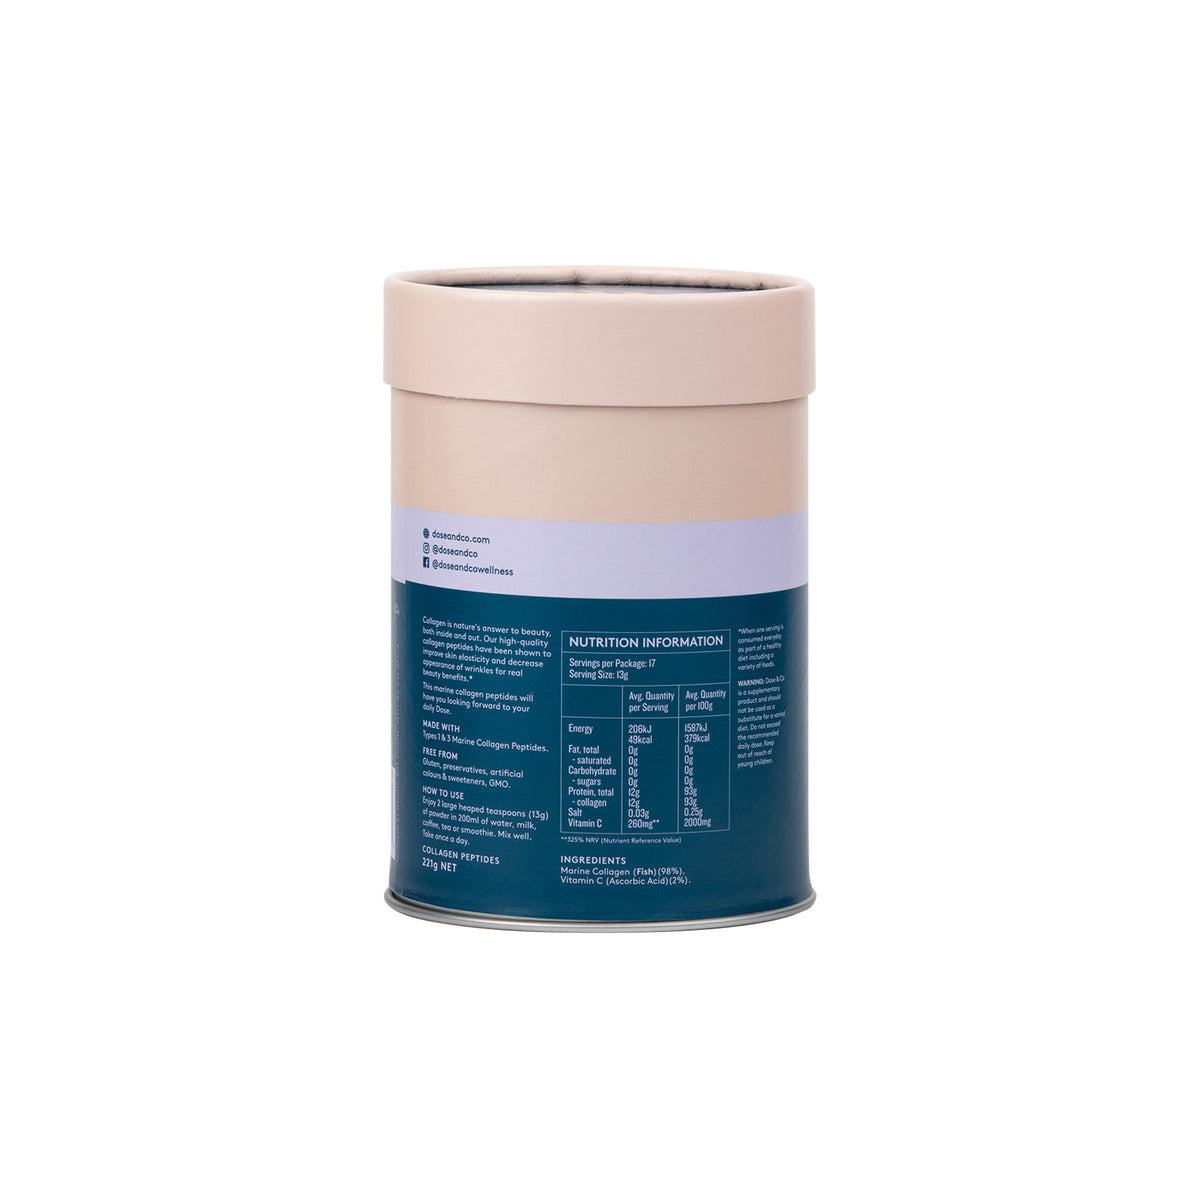 Dose &amp; Co Pure Marine Collagen Peptides - Shop Online | Retail Box